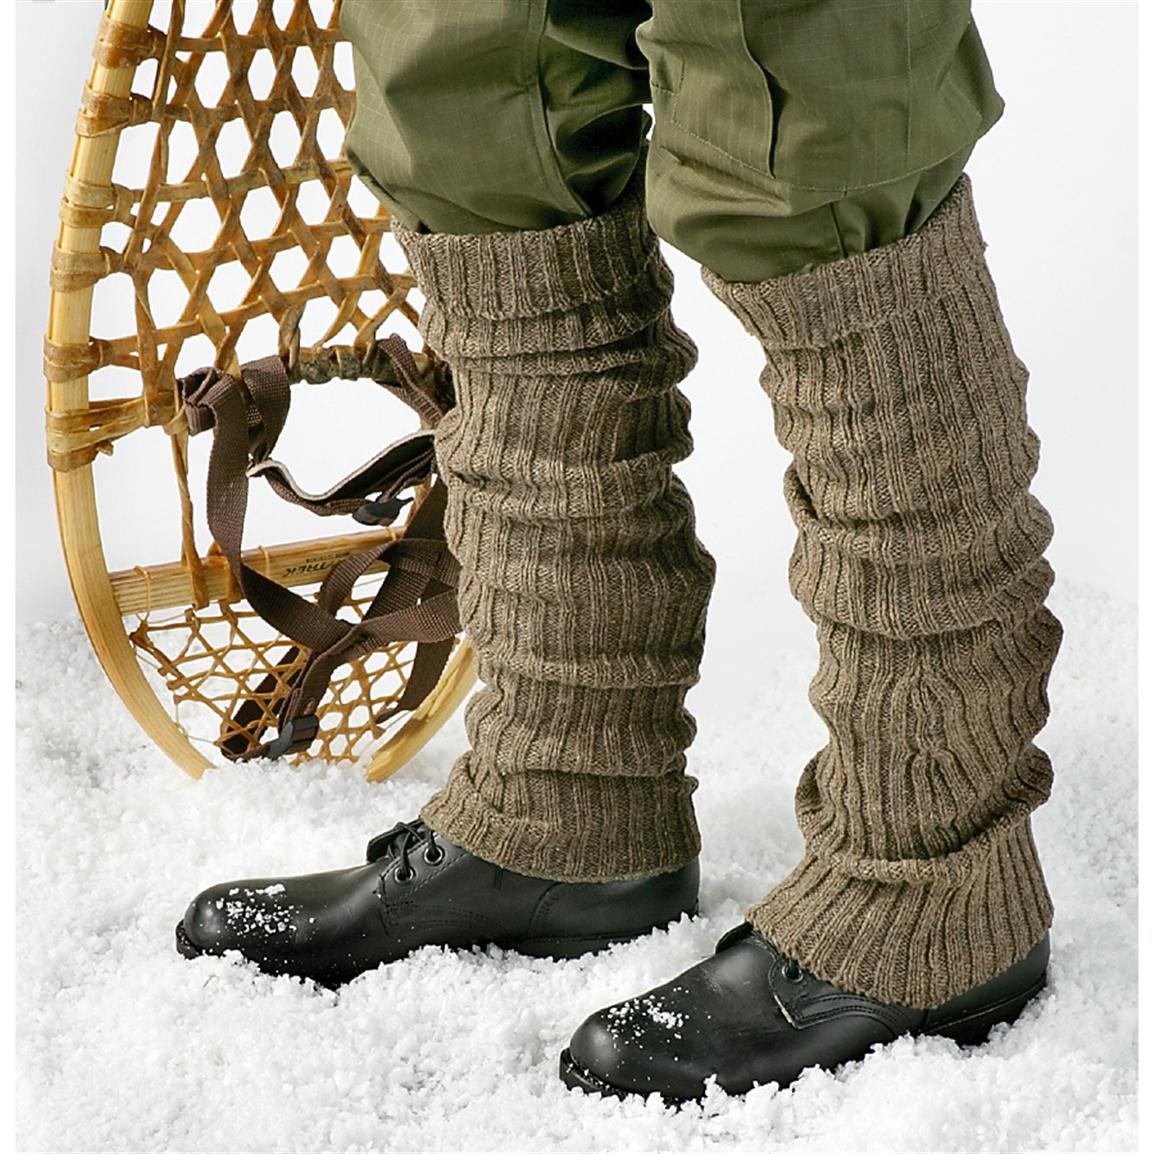 impliceren Professor Vochtig Swedish Military Surplus Wool Leg Warmers, 2 Pairs, New - 152173, Military  Socks at Sportsman's Guide